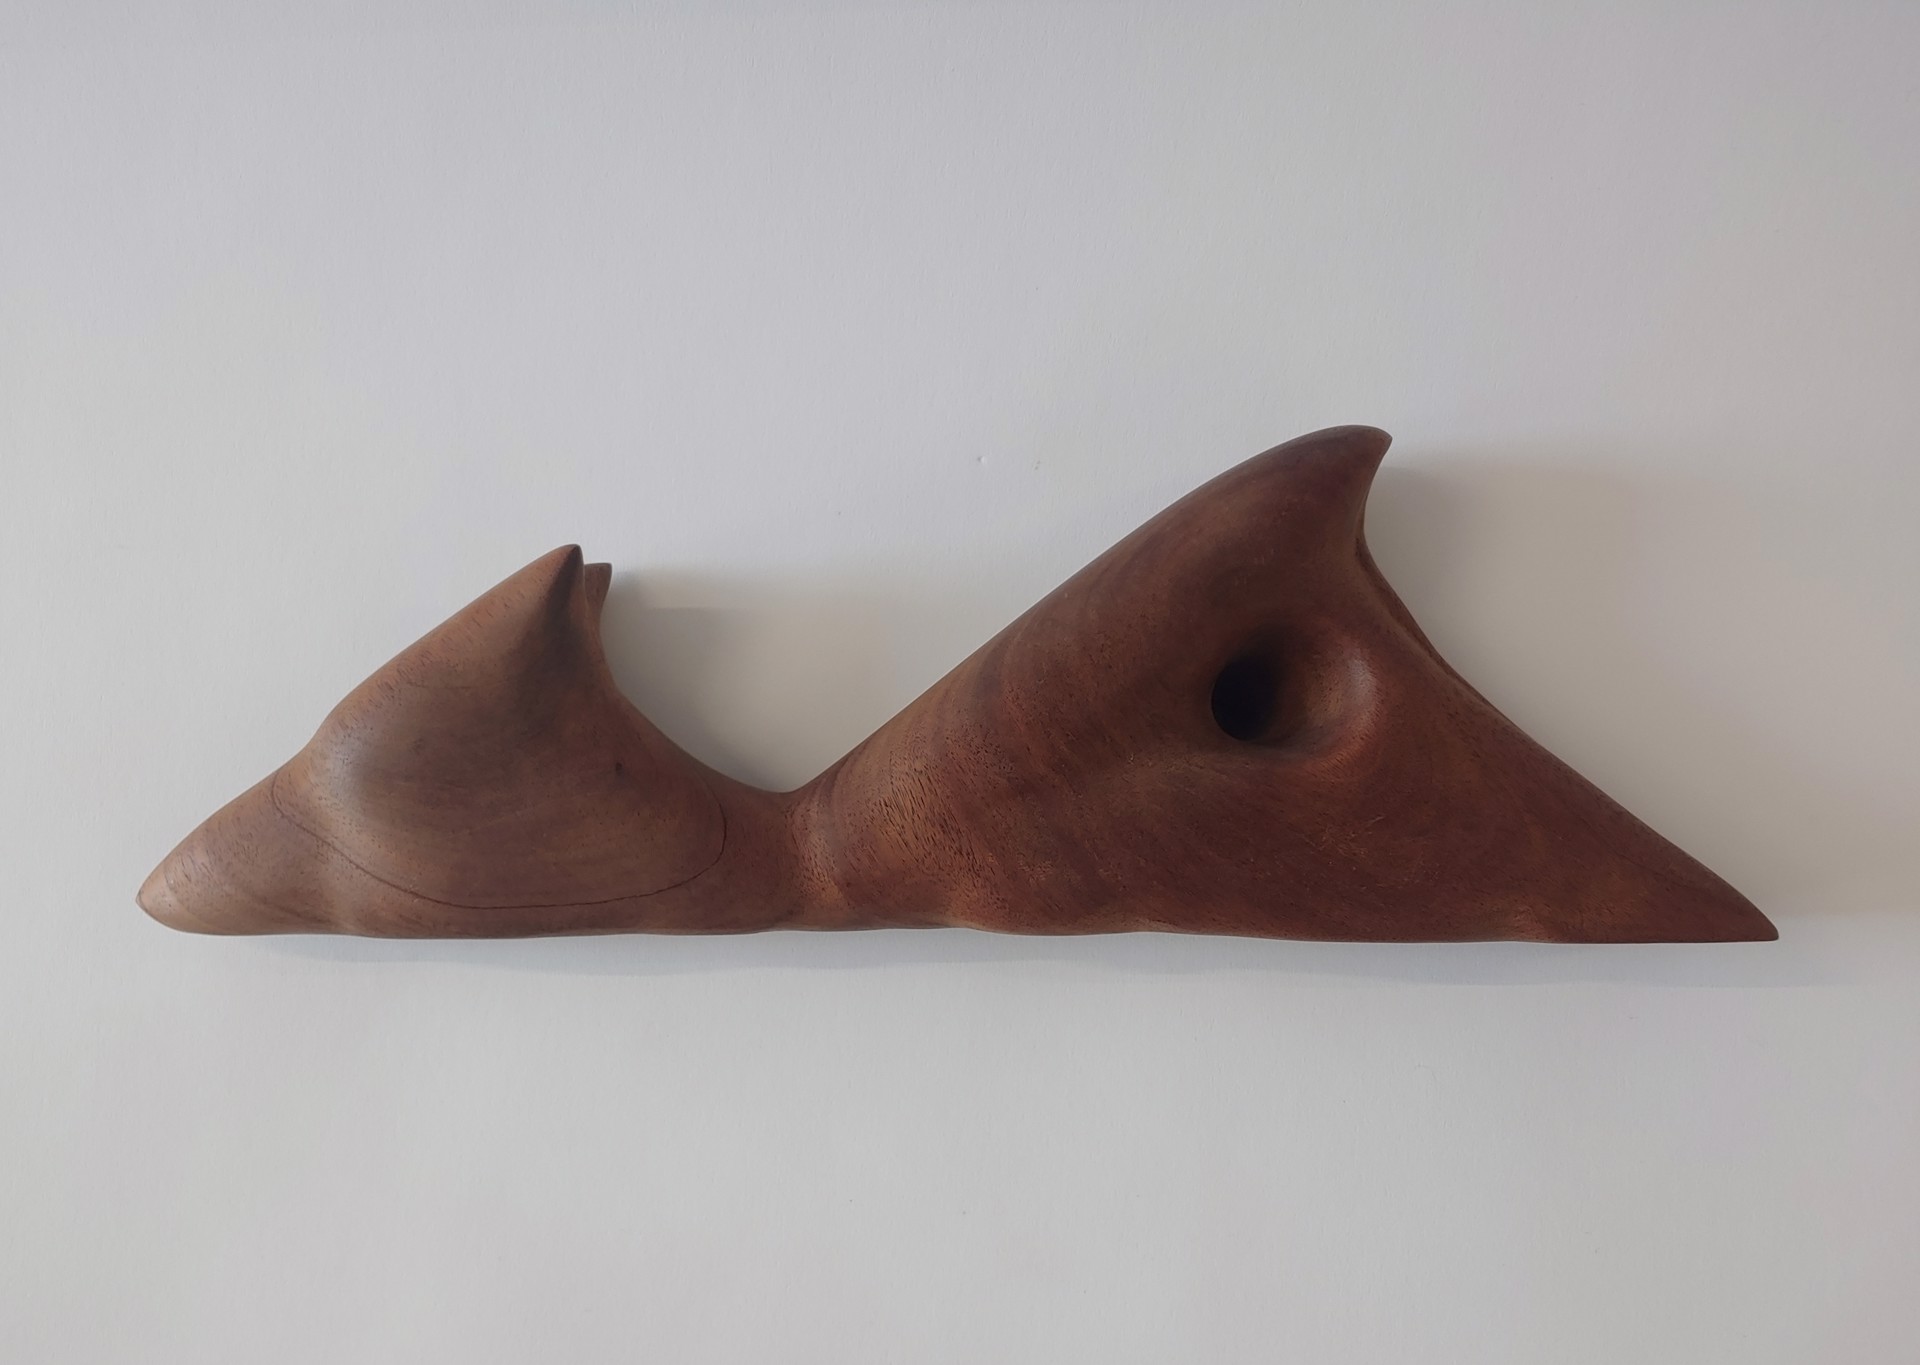 Abstract Sculpture #2 - Wood Sculpture by David Amdur